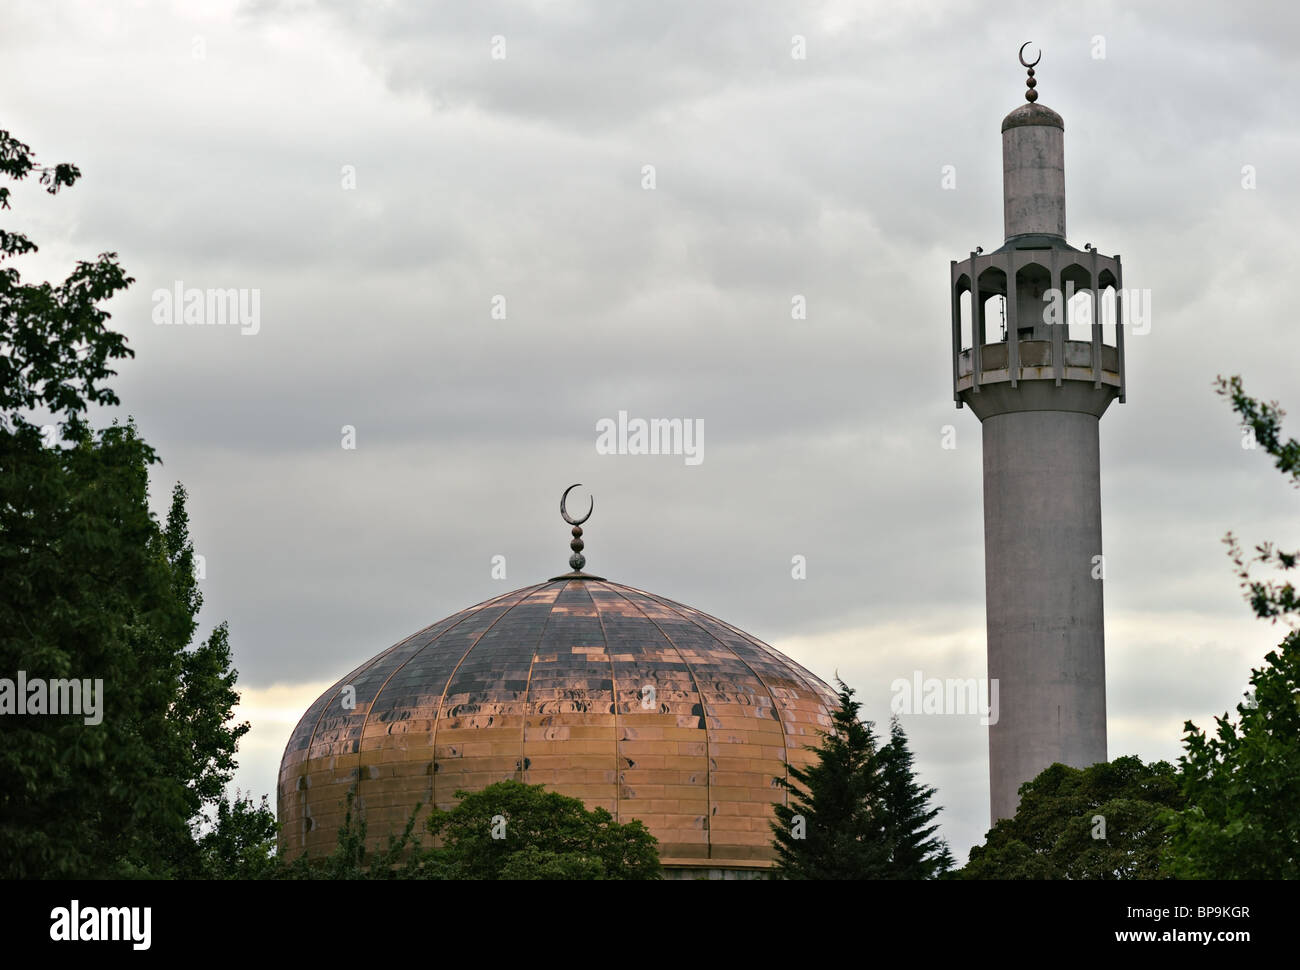 London Central Mosque (Regents Park Mosque) England, UK, before a storm Stock Photo